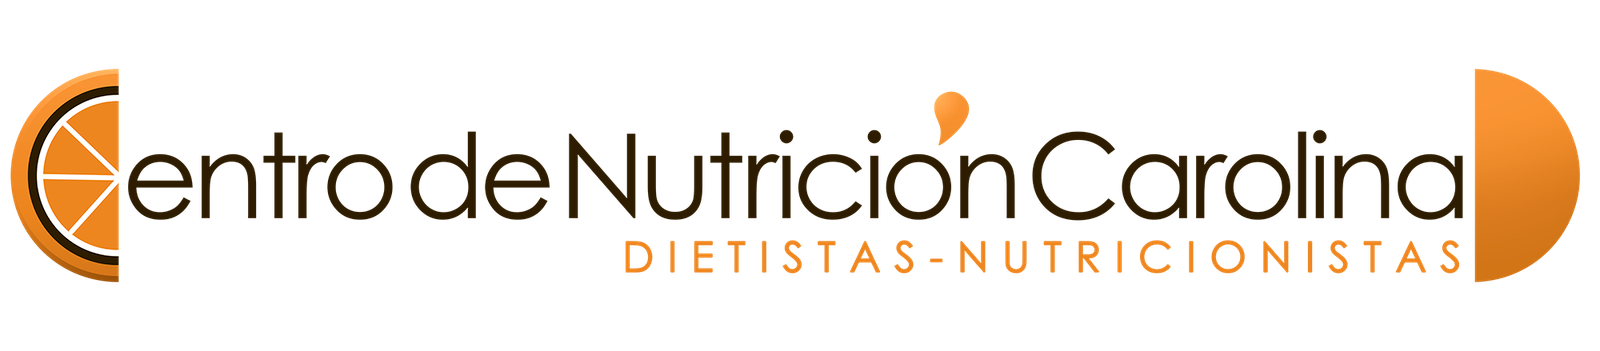 Carolina Perez Nutricionista